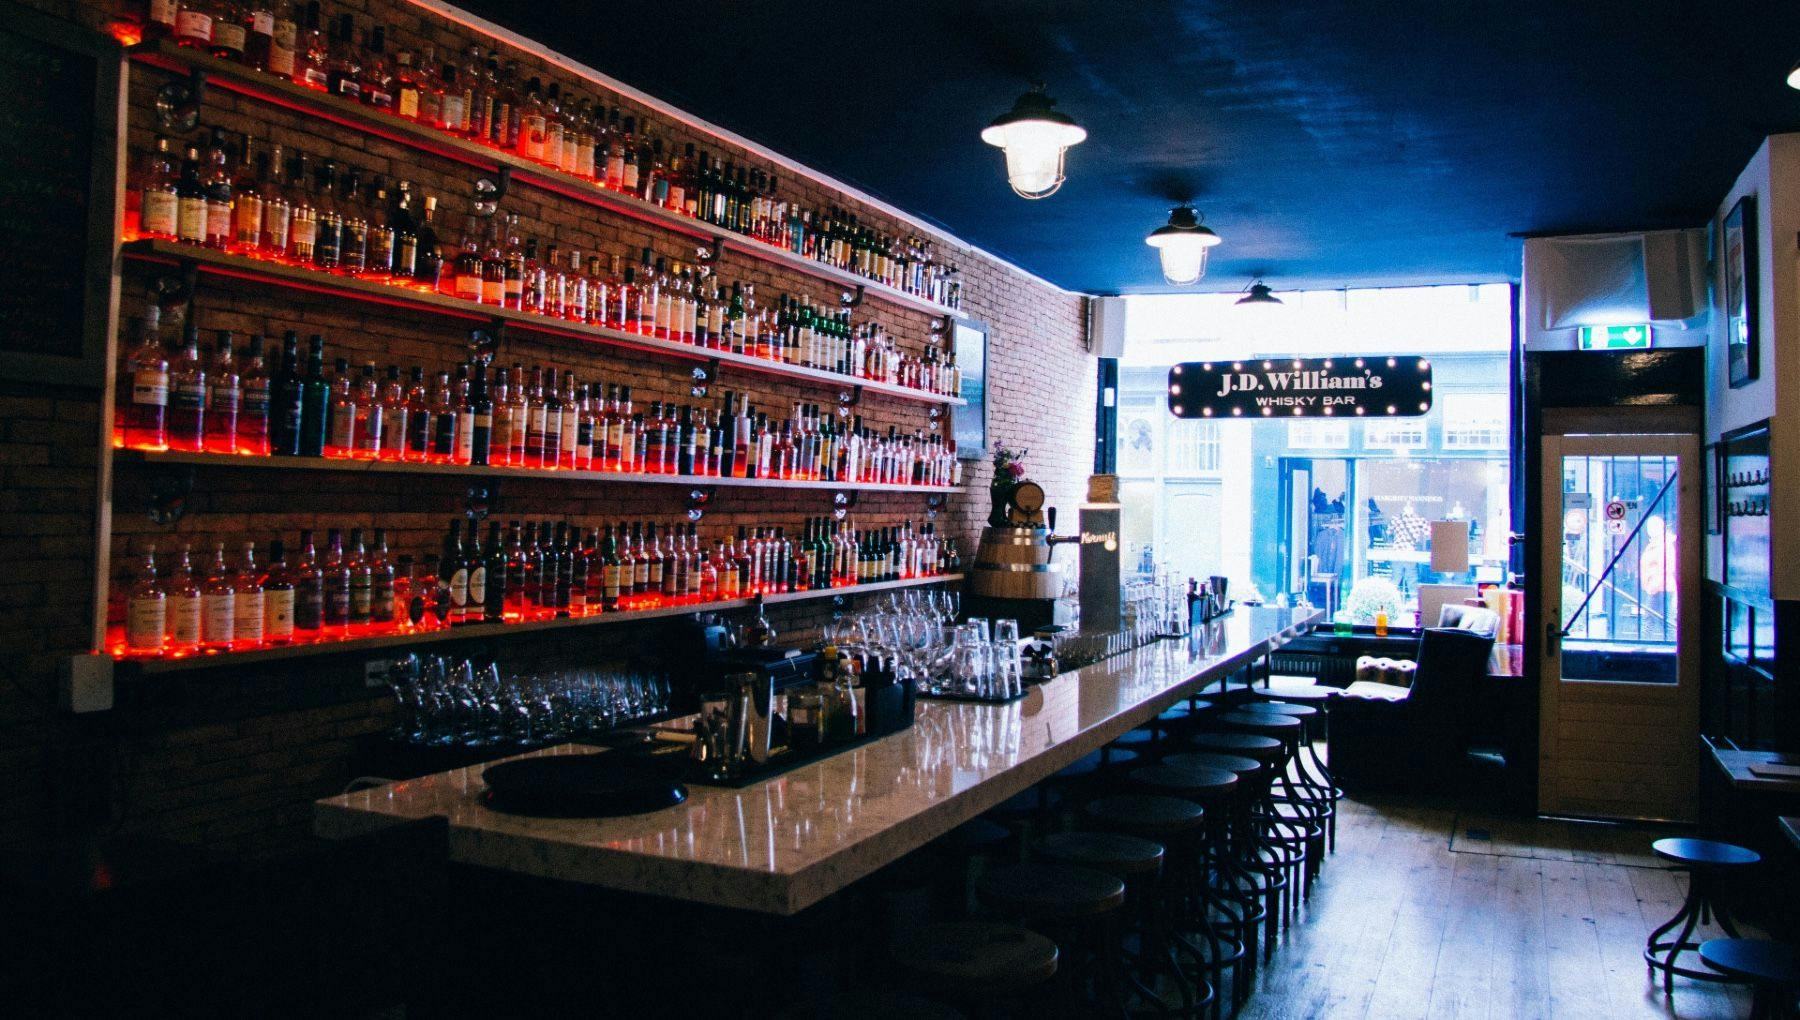 JD William's whisky bar interior